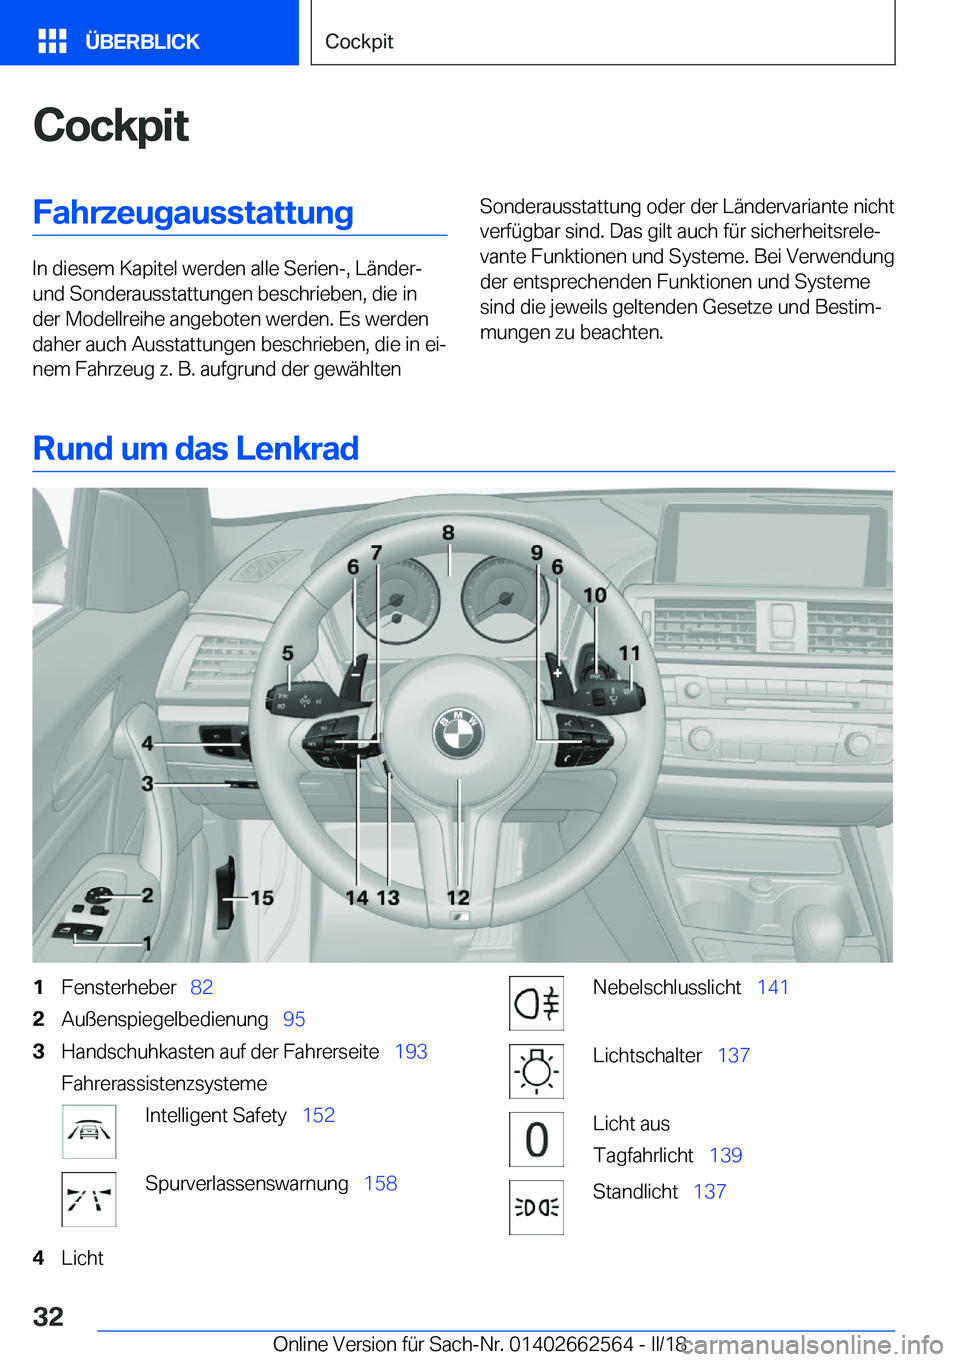 BMW M2 2018  Betriebsanleitungen (in German) �C�o�c�k�p�i�t�F�a�h�r�z�e�u�g�a�u�s�s�t�a�t�t�u�n�g
�I�n� �d�i�e�s�e�m� �K�a�p�i�t�e�l� �w�e�r�d�e�n� �a�l�l�e� �S�e�r�i�e�n�-�,� �L�